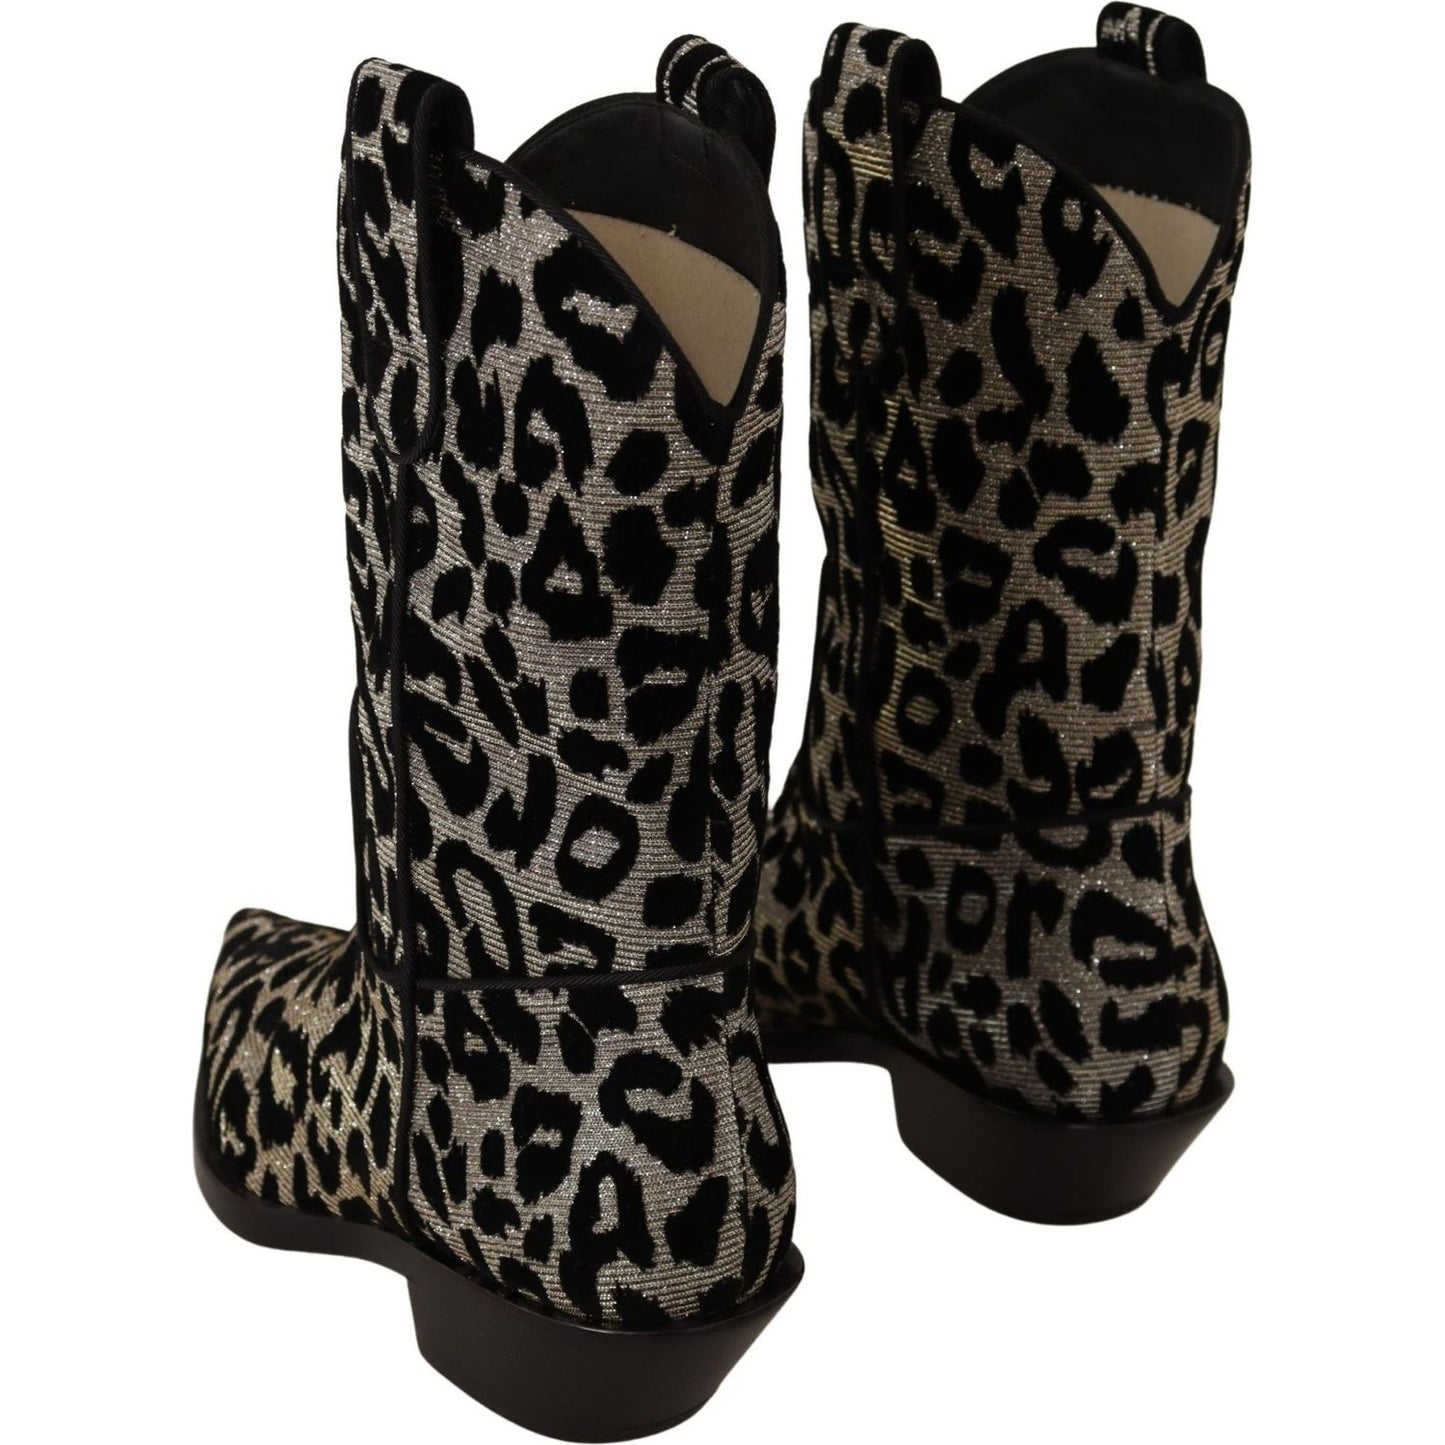 Dolce & Gabbana Elegant Leopard Print Mid Calf Boots gray-black-leopard-cowboy-boots-shoes IMG_6045-scaled-2be498e0-ed9.jpg